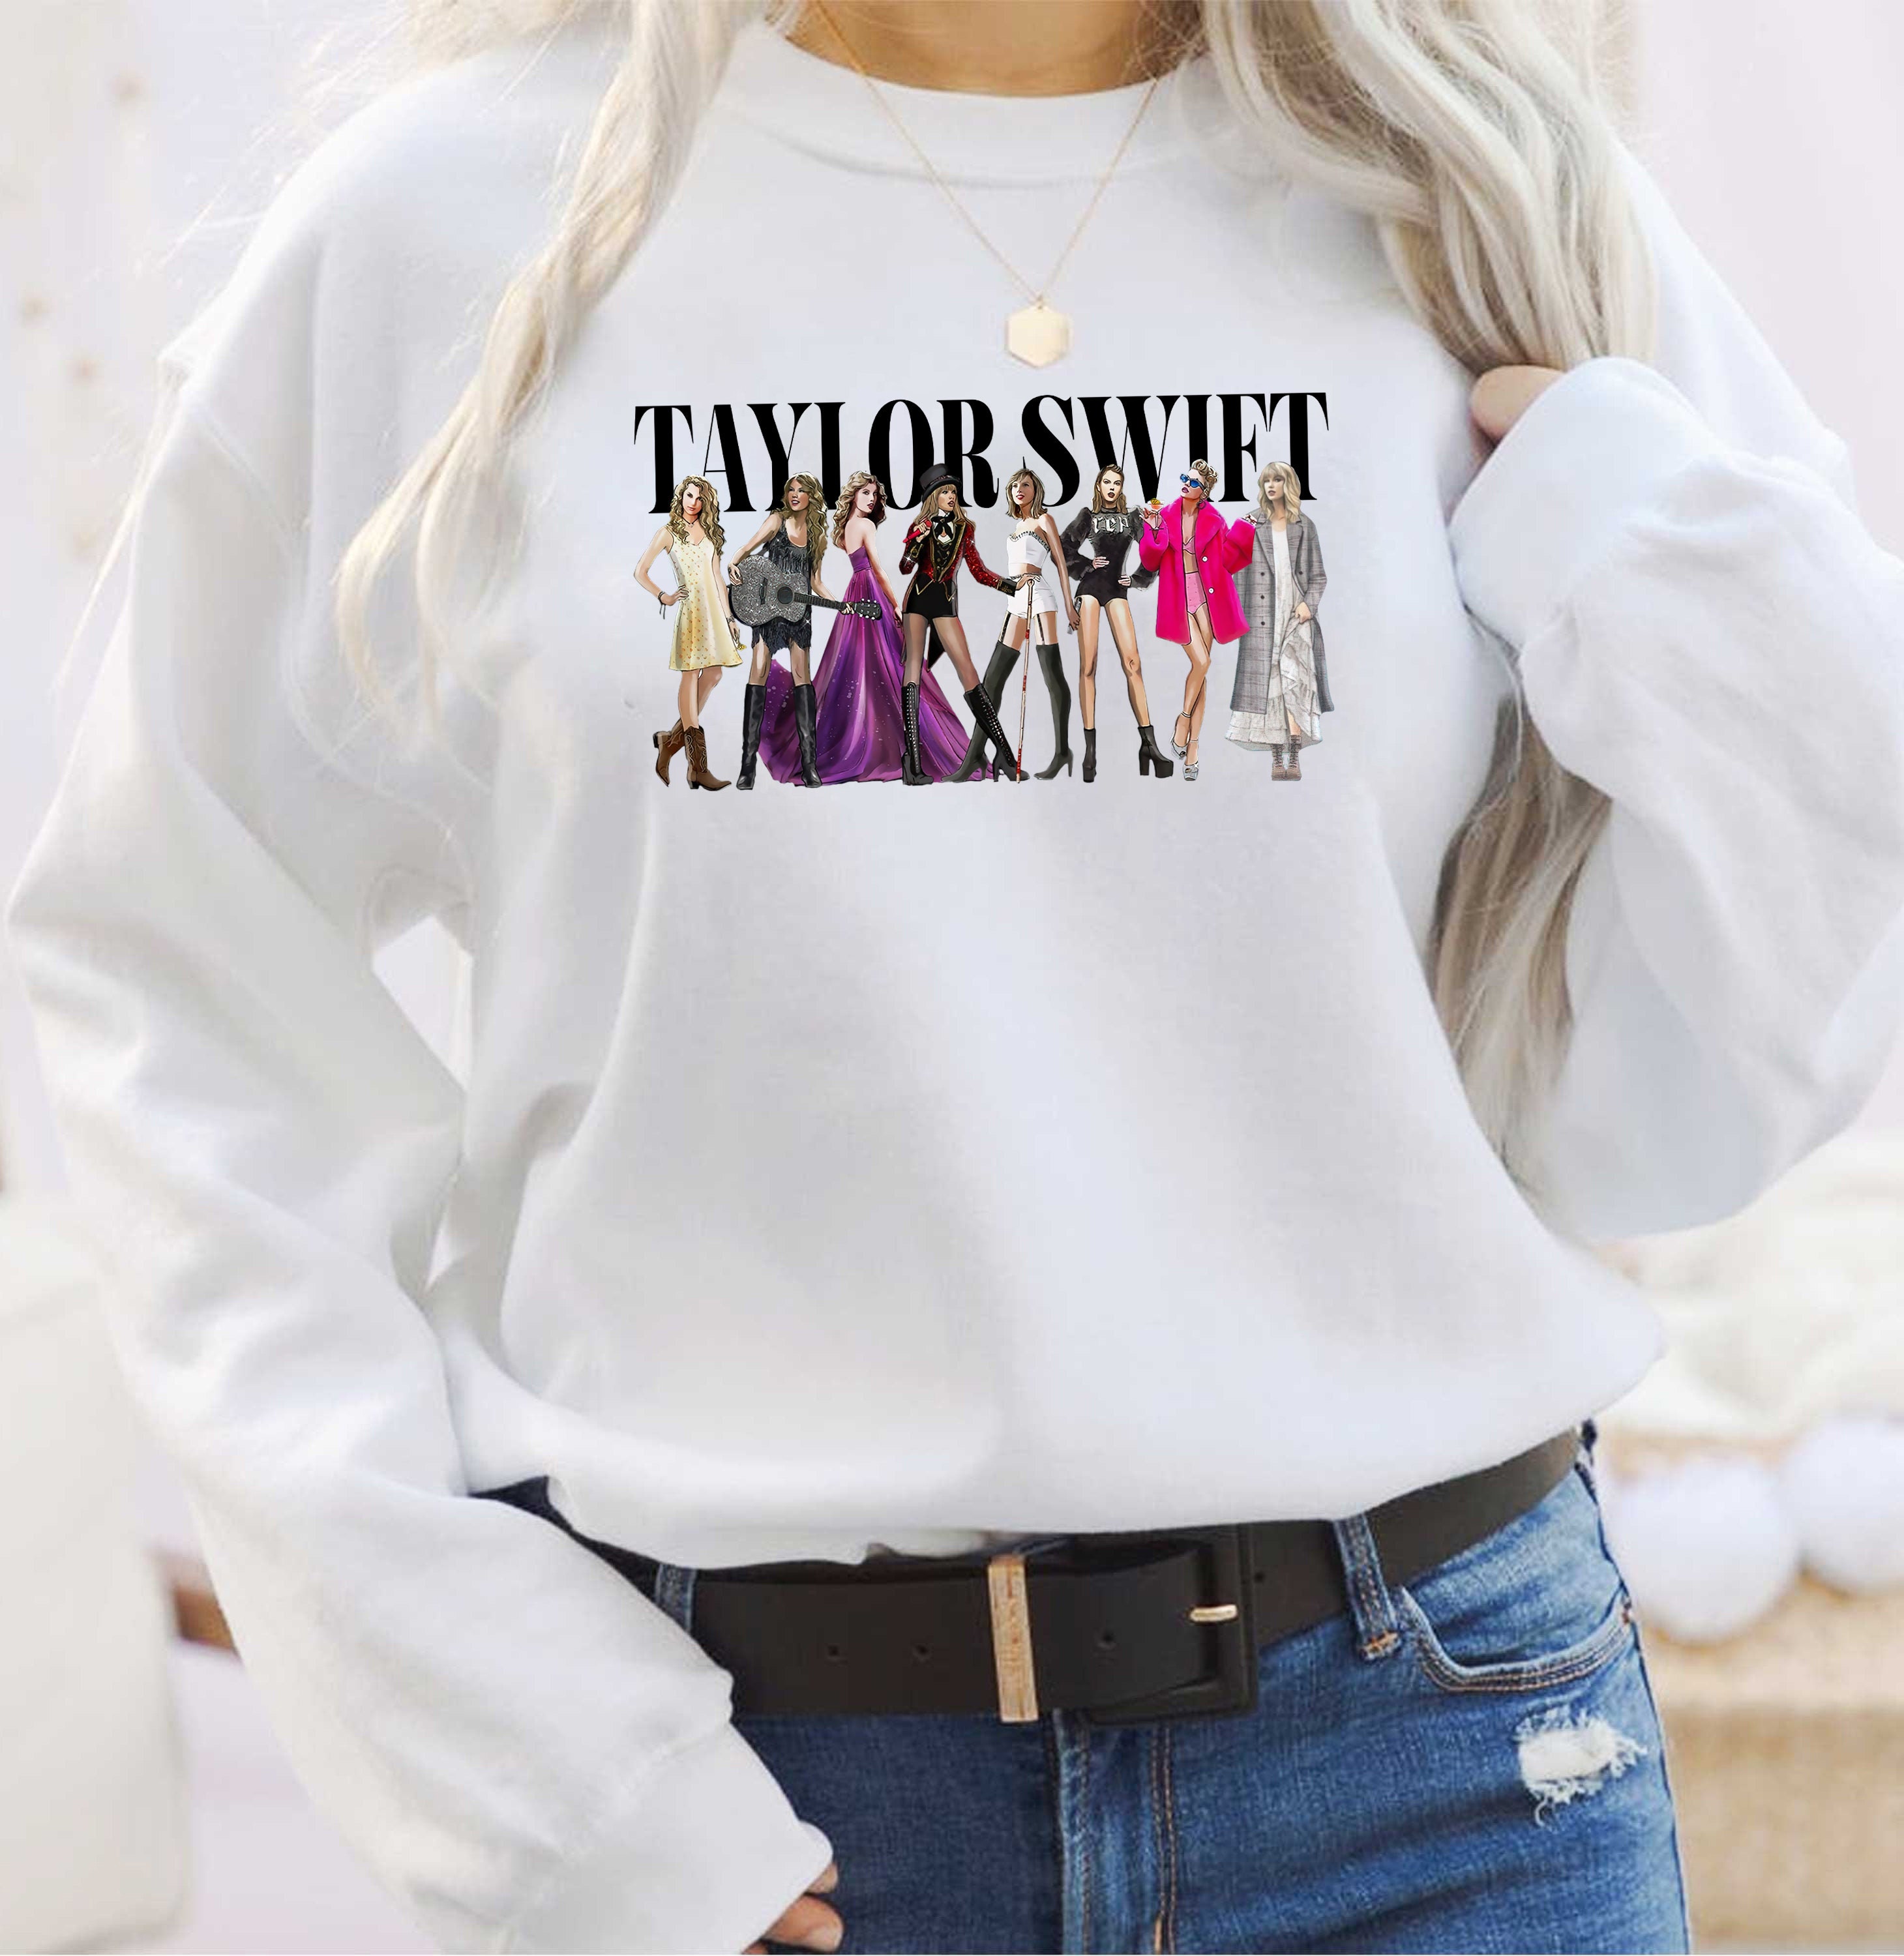 Taylor Swift Store Merchandise - Image to u